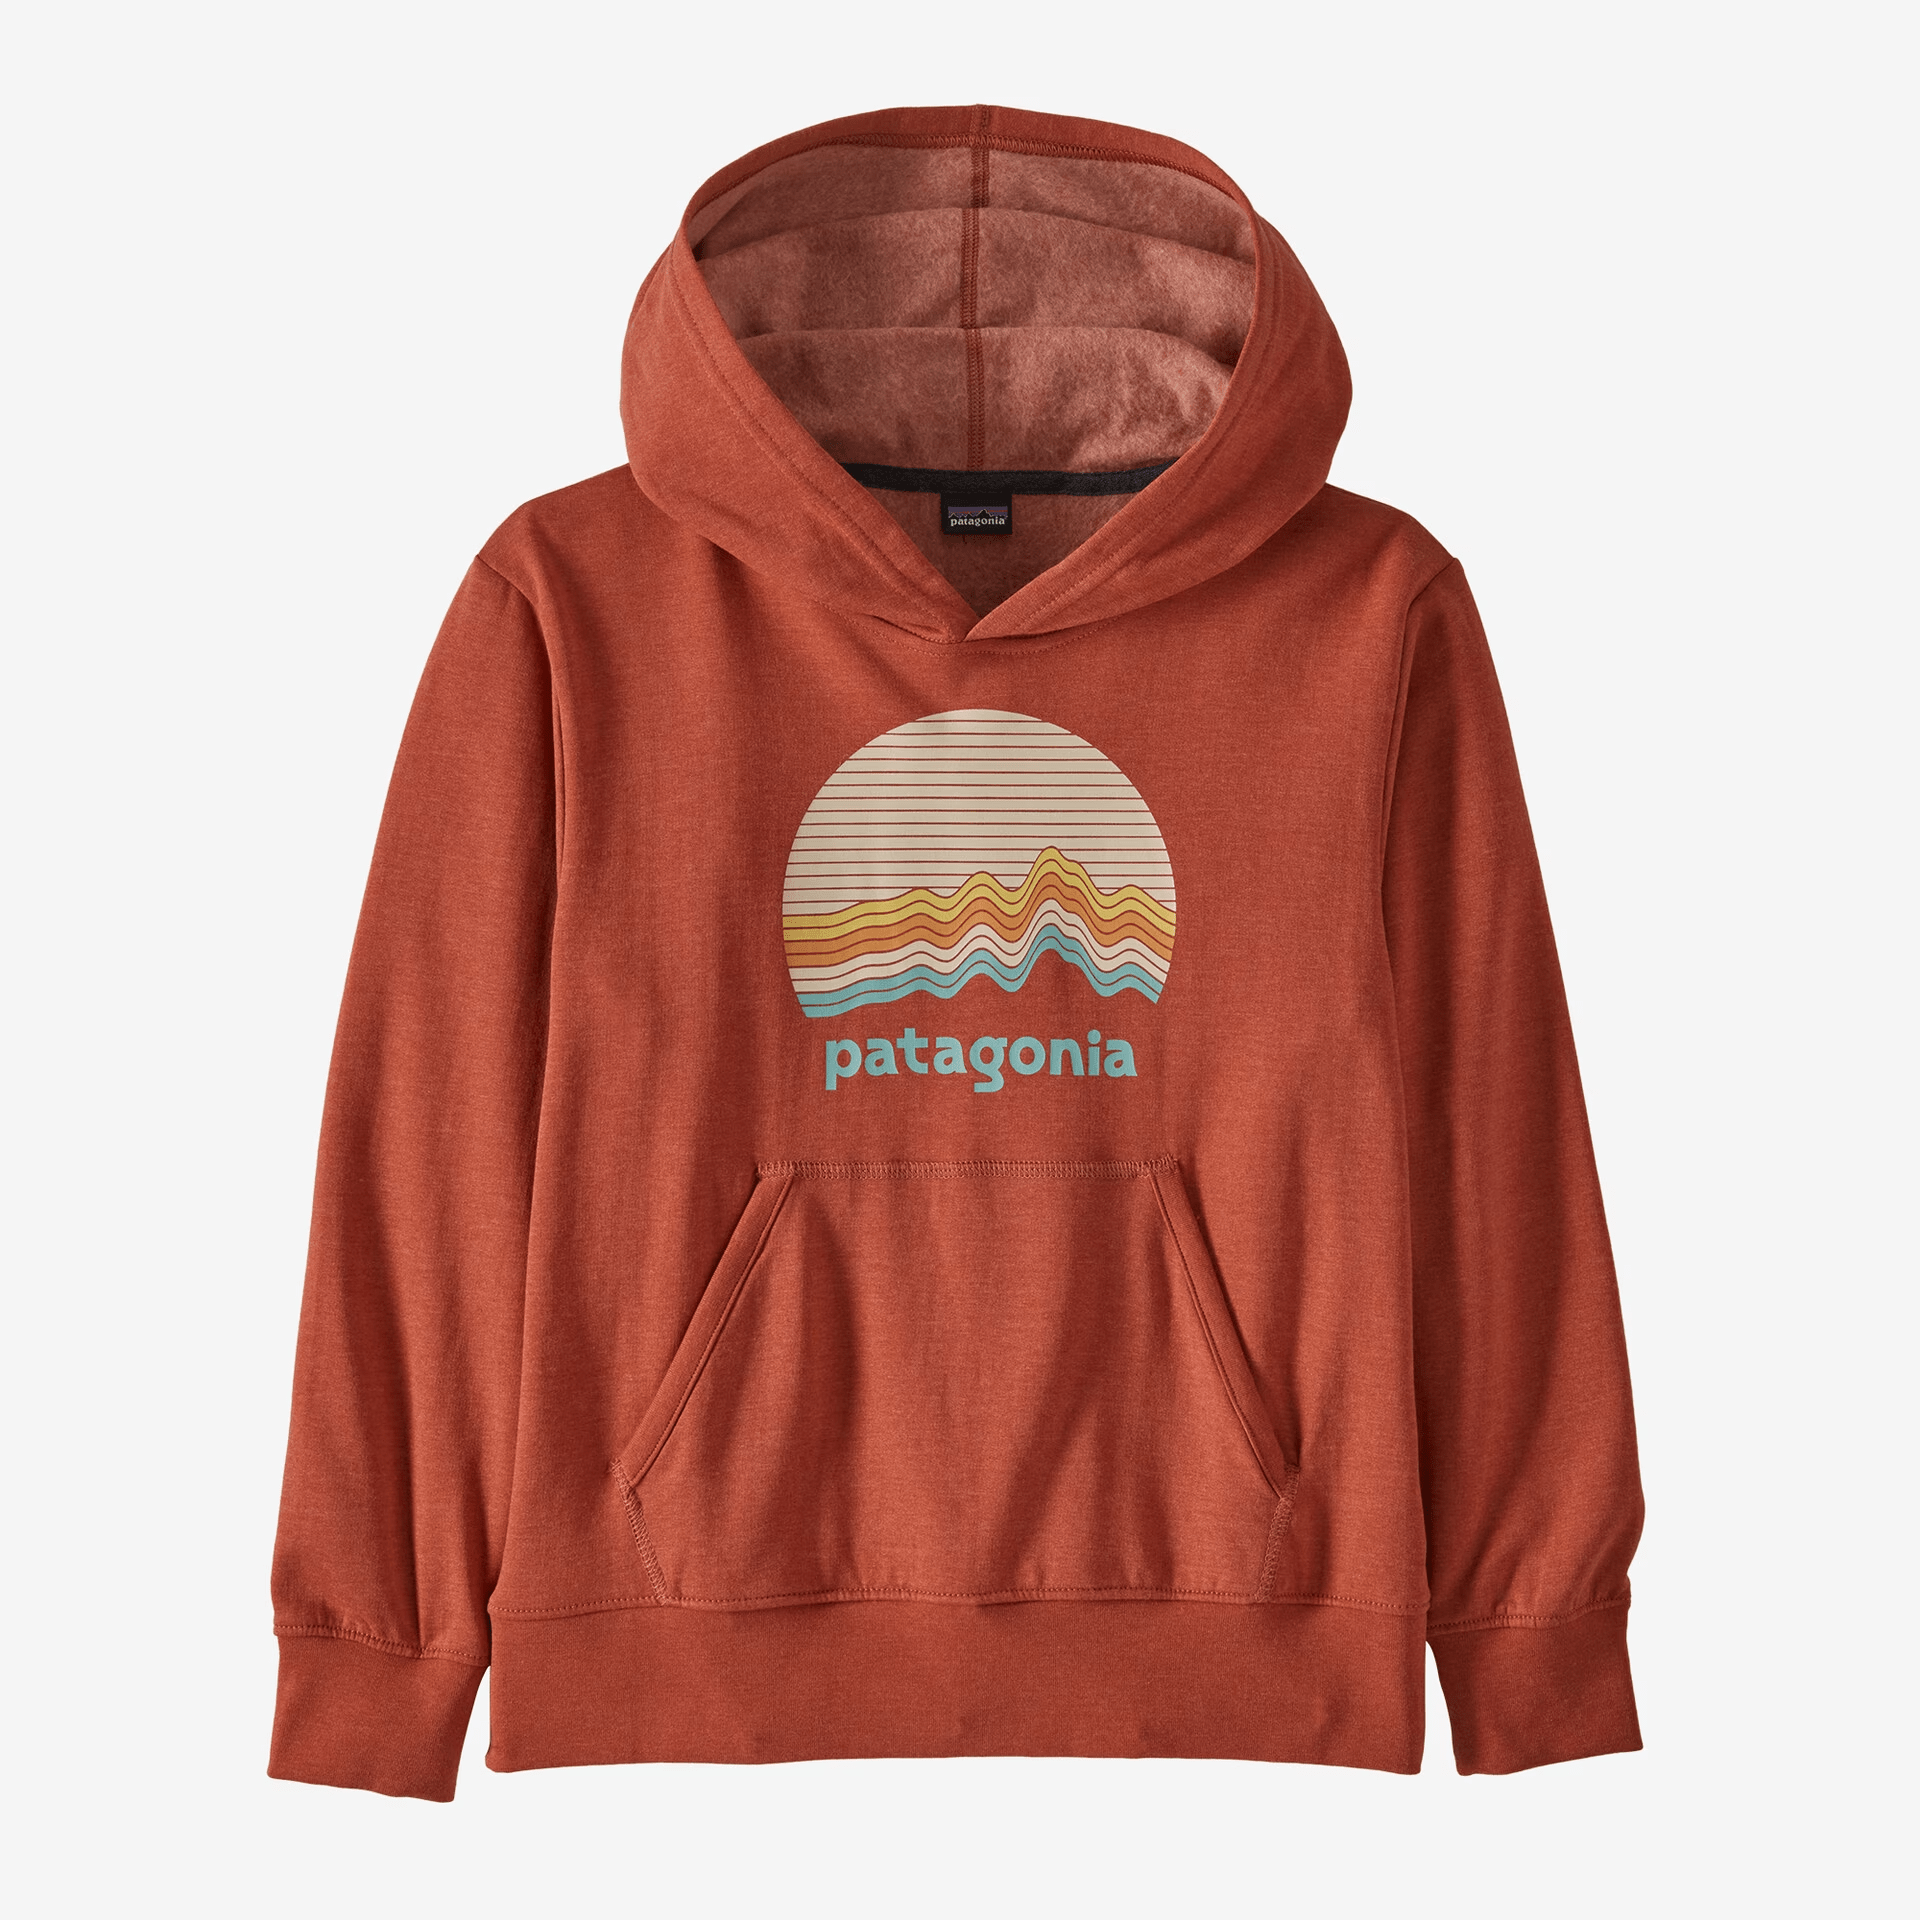 Patagonia Lightweight Graphic Hoody Sweatshirt - Kids M Ridge Rise Moonlight - Burl Red